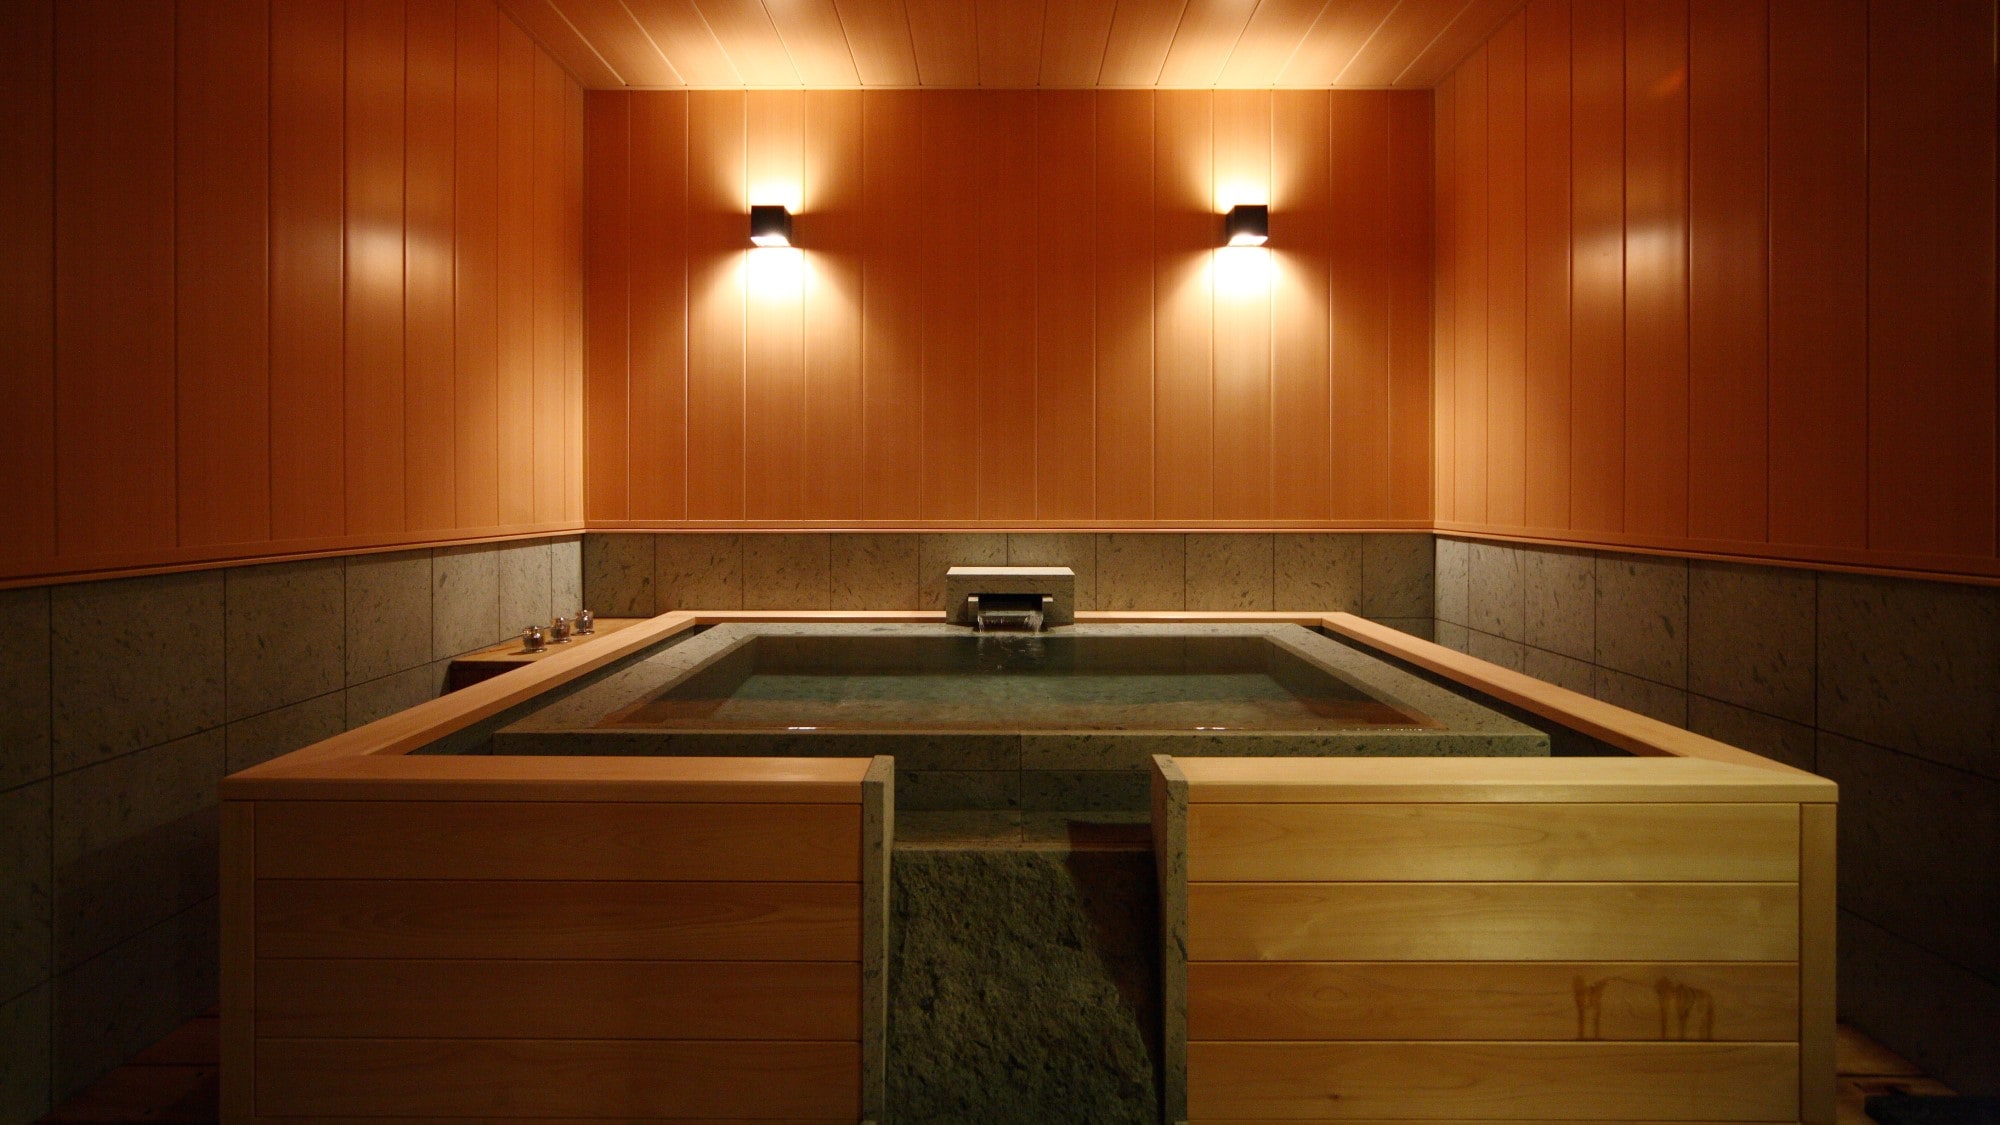 ☆ Spa suite room "Kikumanyo" Flat type in-room family bath image